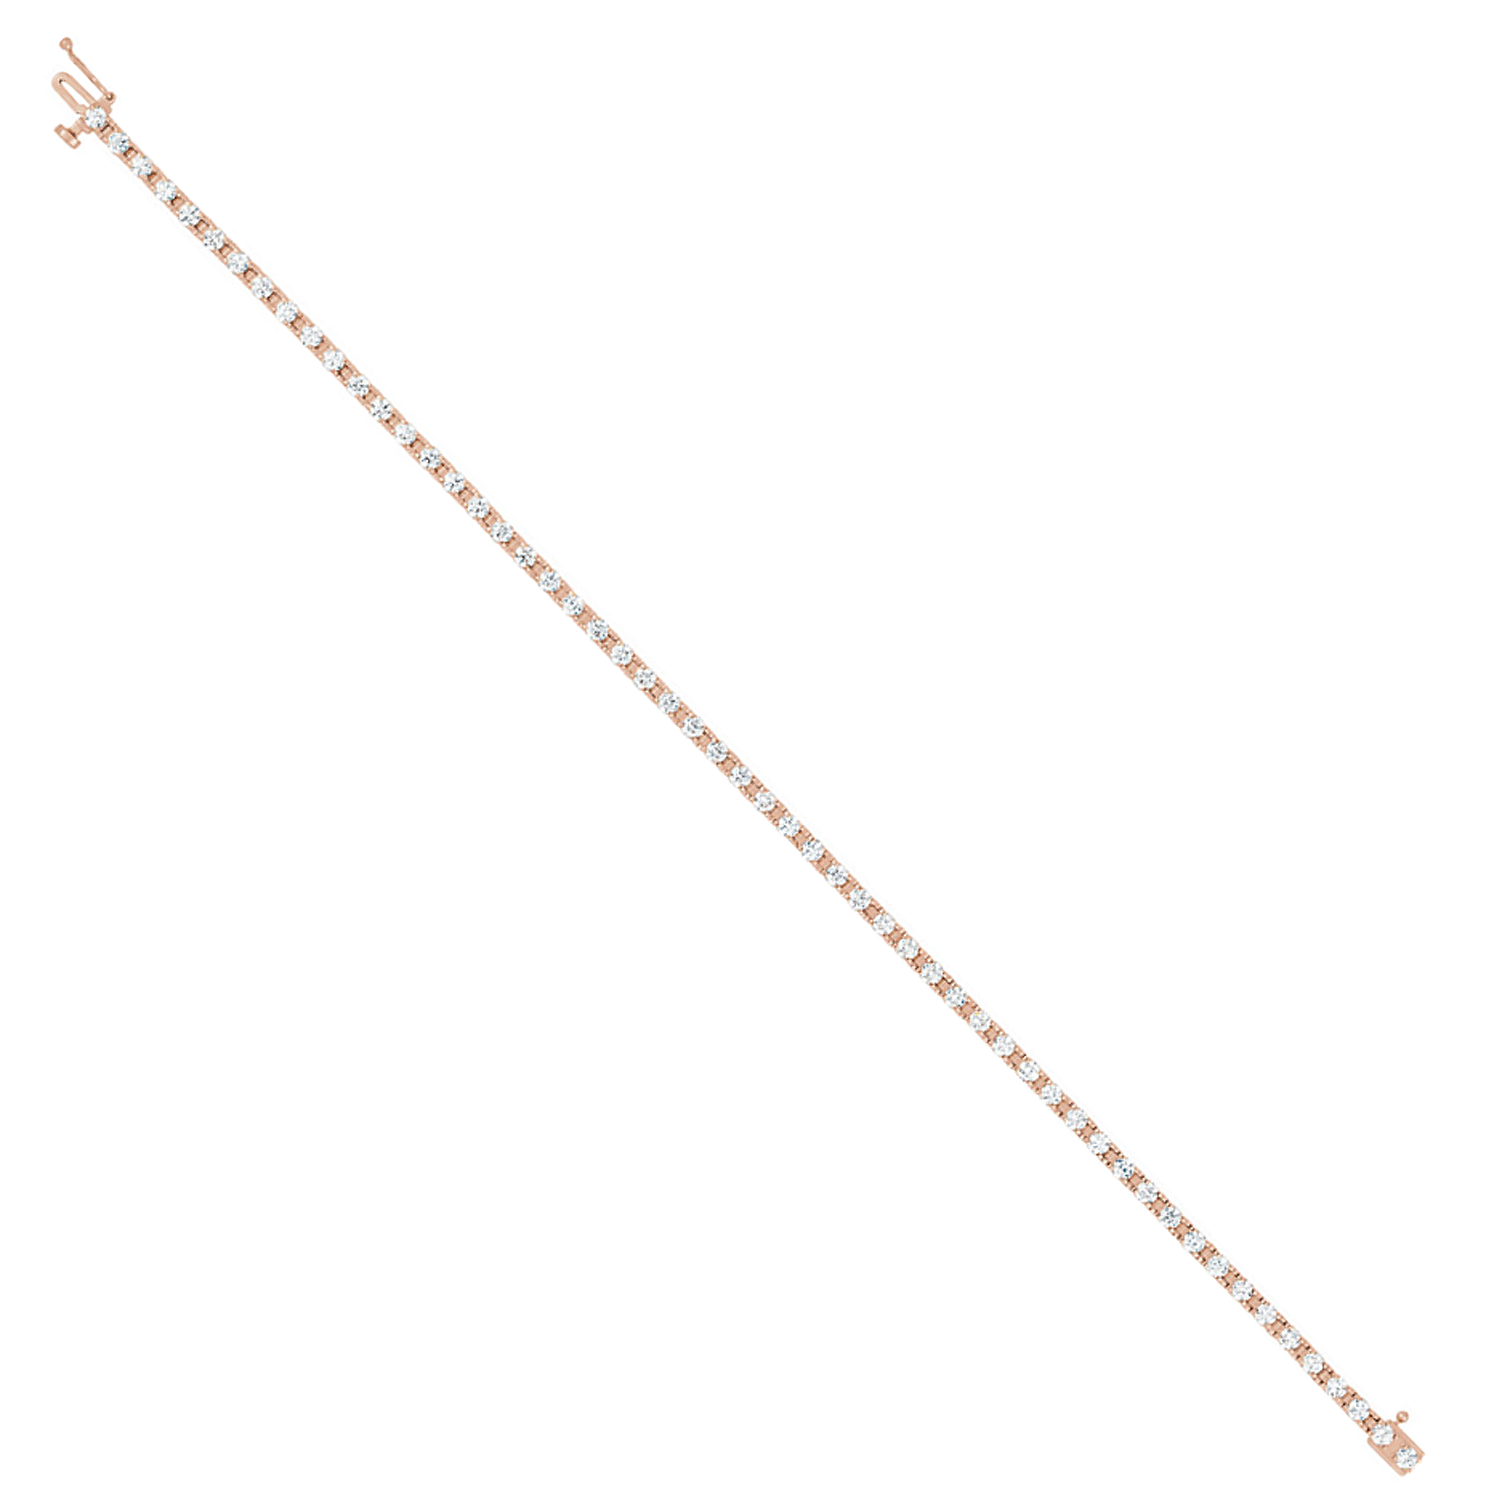 14k rose gold diamond tennis bracelet with 56 hand-set diamonds totaling 2.25 carats. 